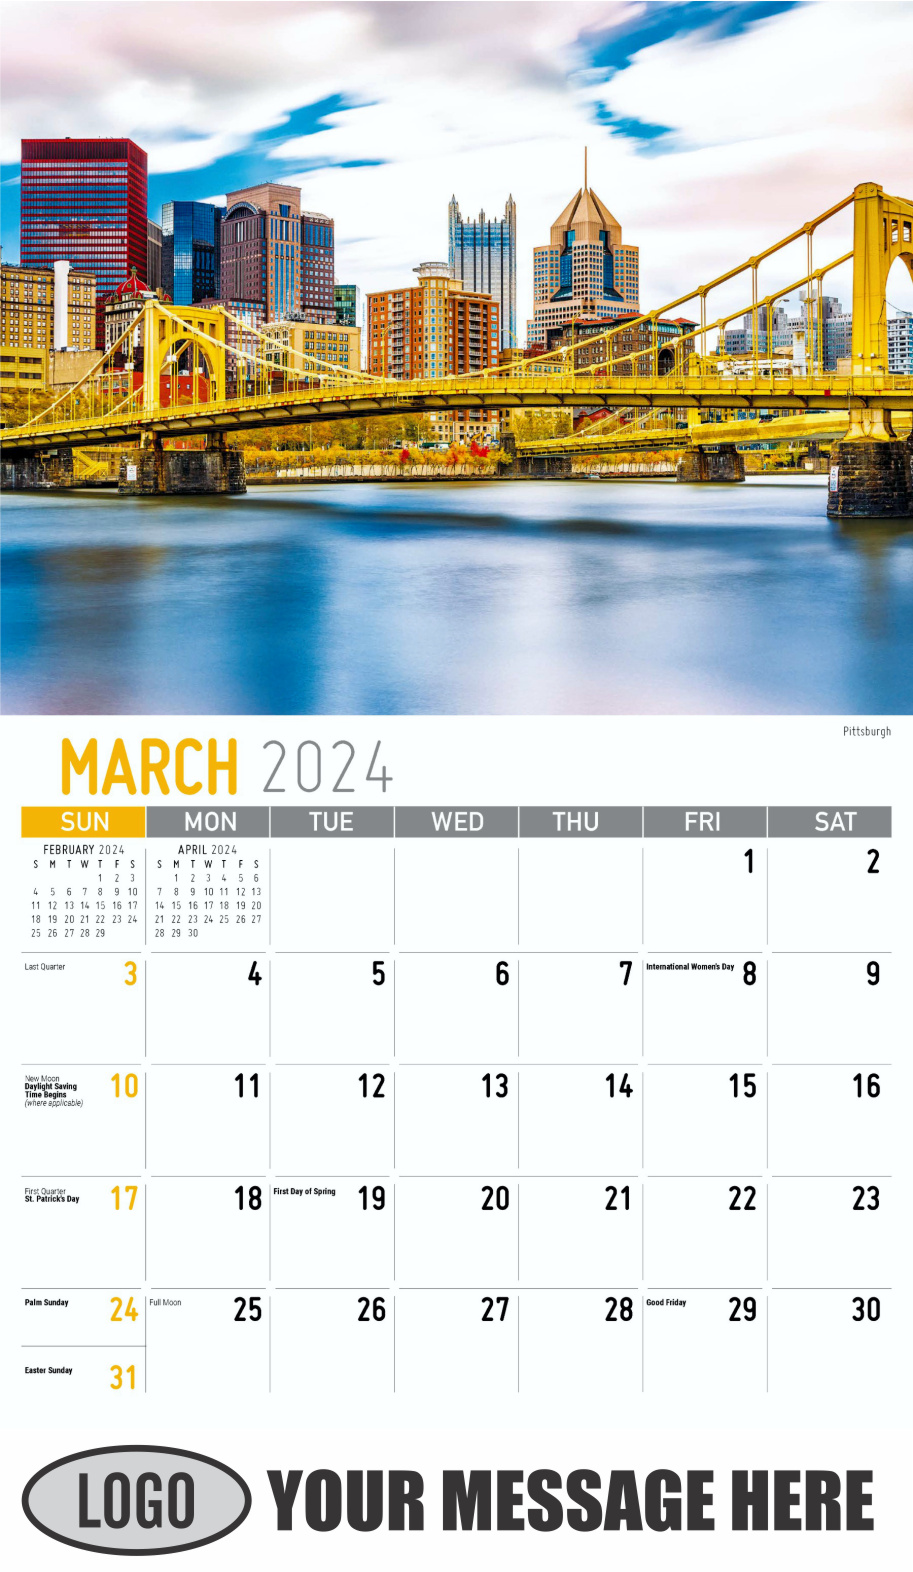 Scenes of Pennsylvania 2024 Business Promotion Calendar - March